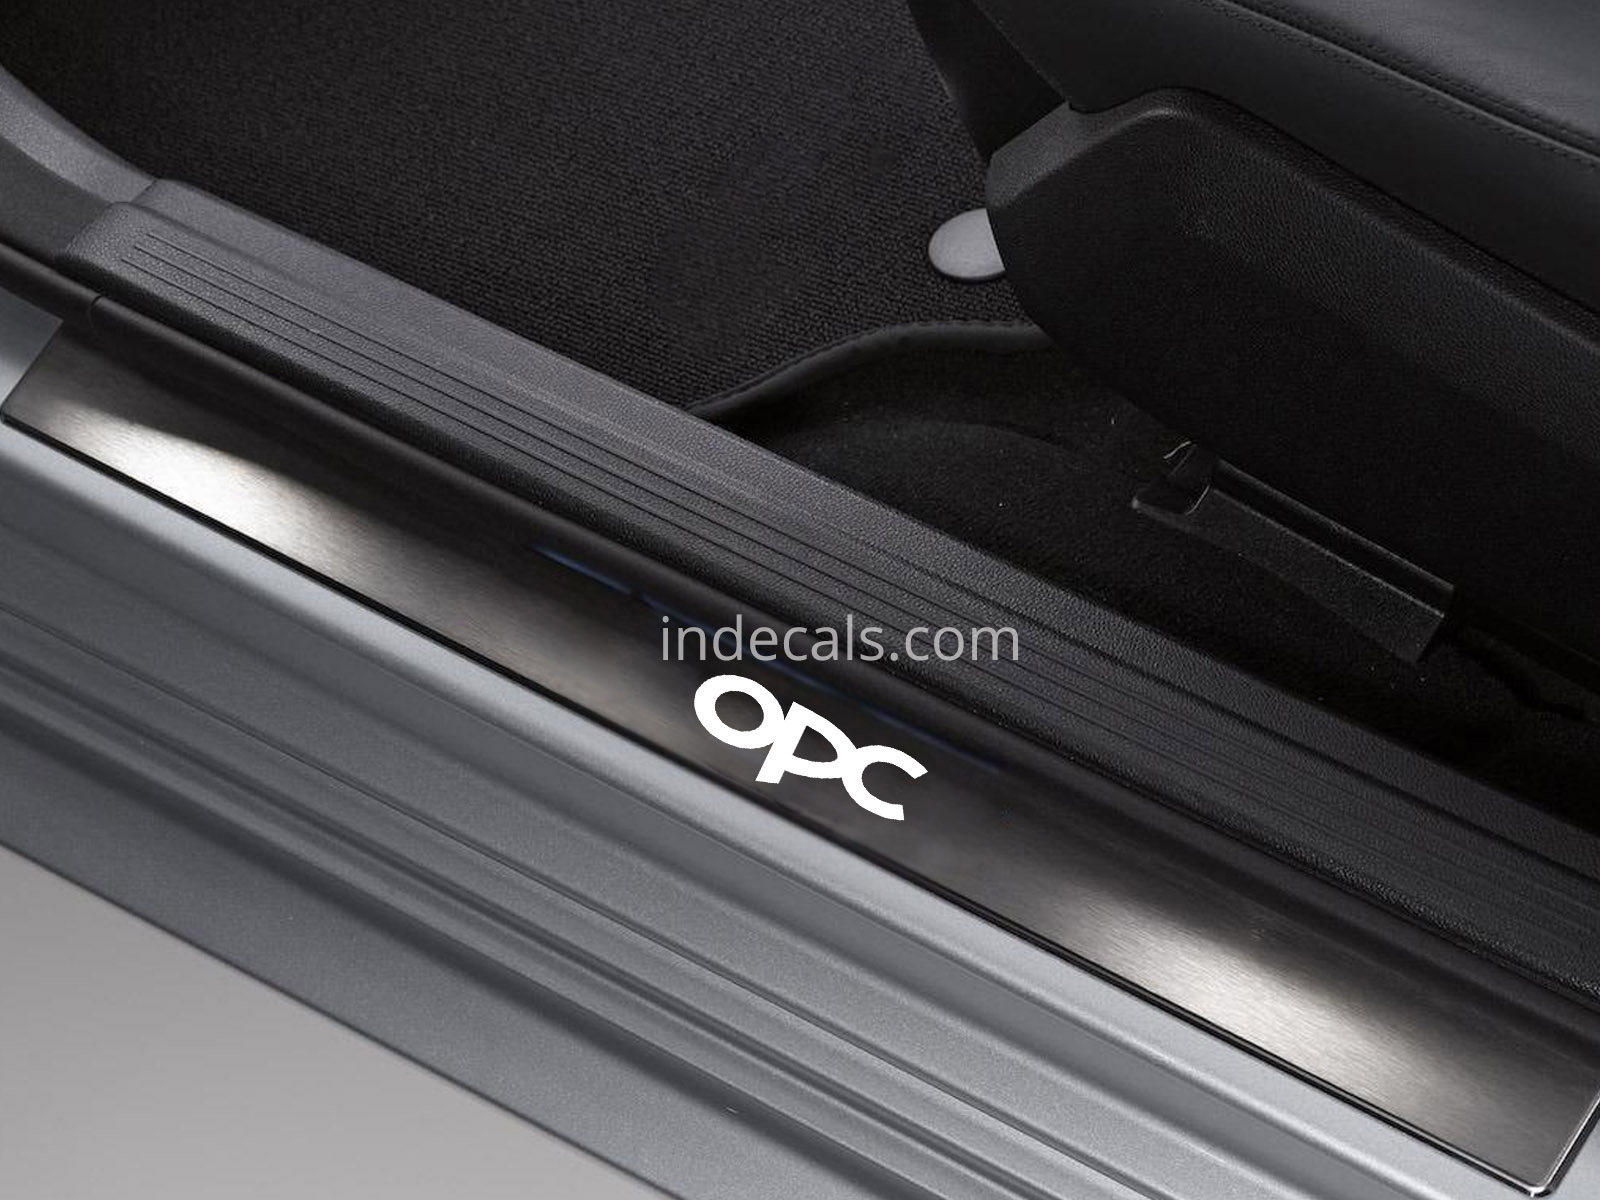 6 x Opel OPC Stickers for Door Sills - White